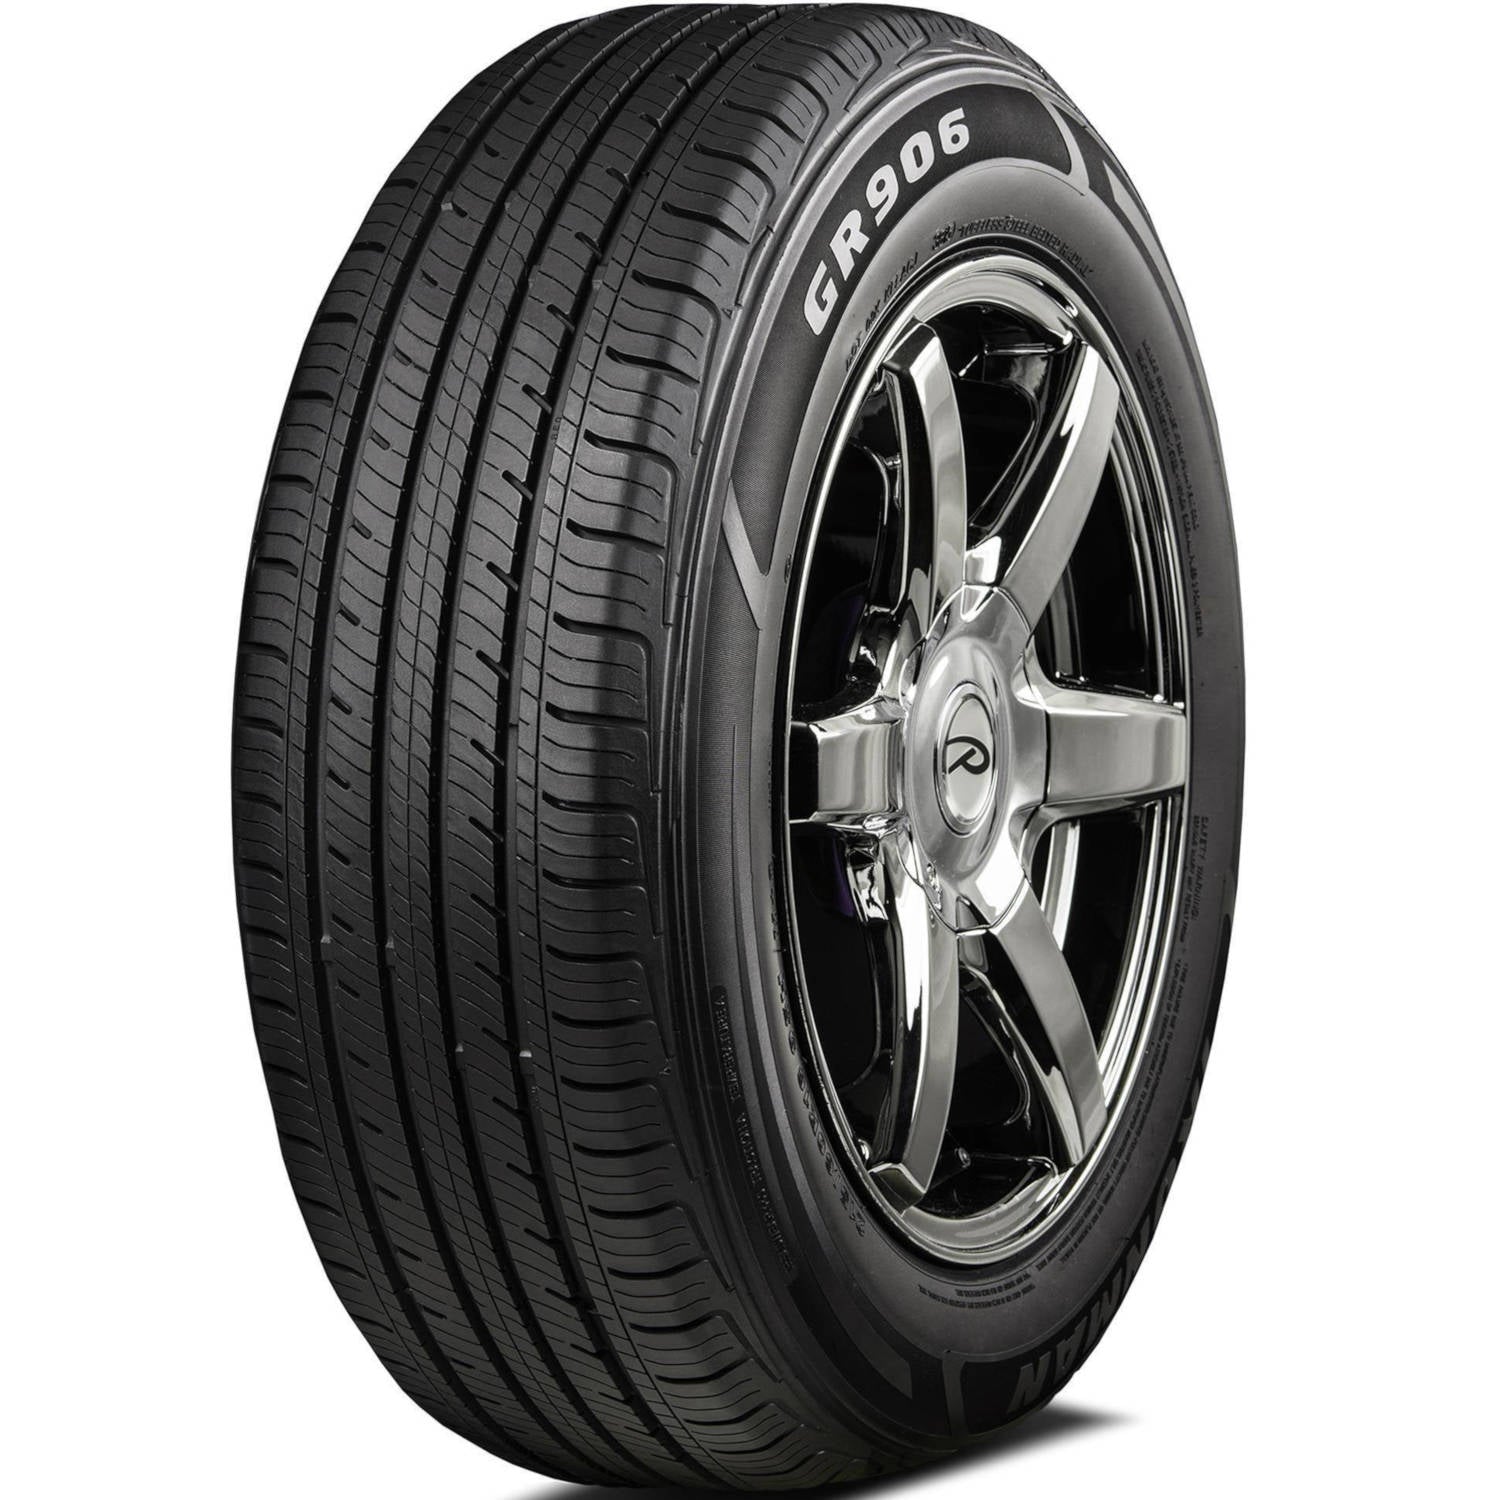 IRONMAN GR906 215/55R17 (26.3X8.5R 17) Tires